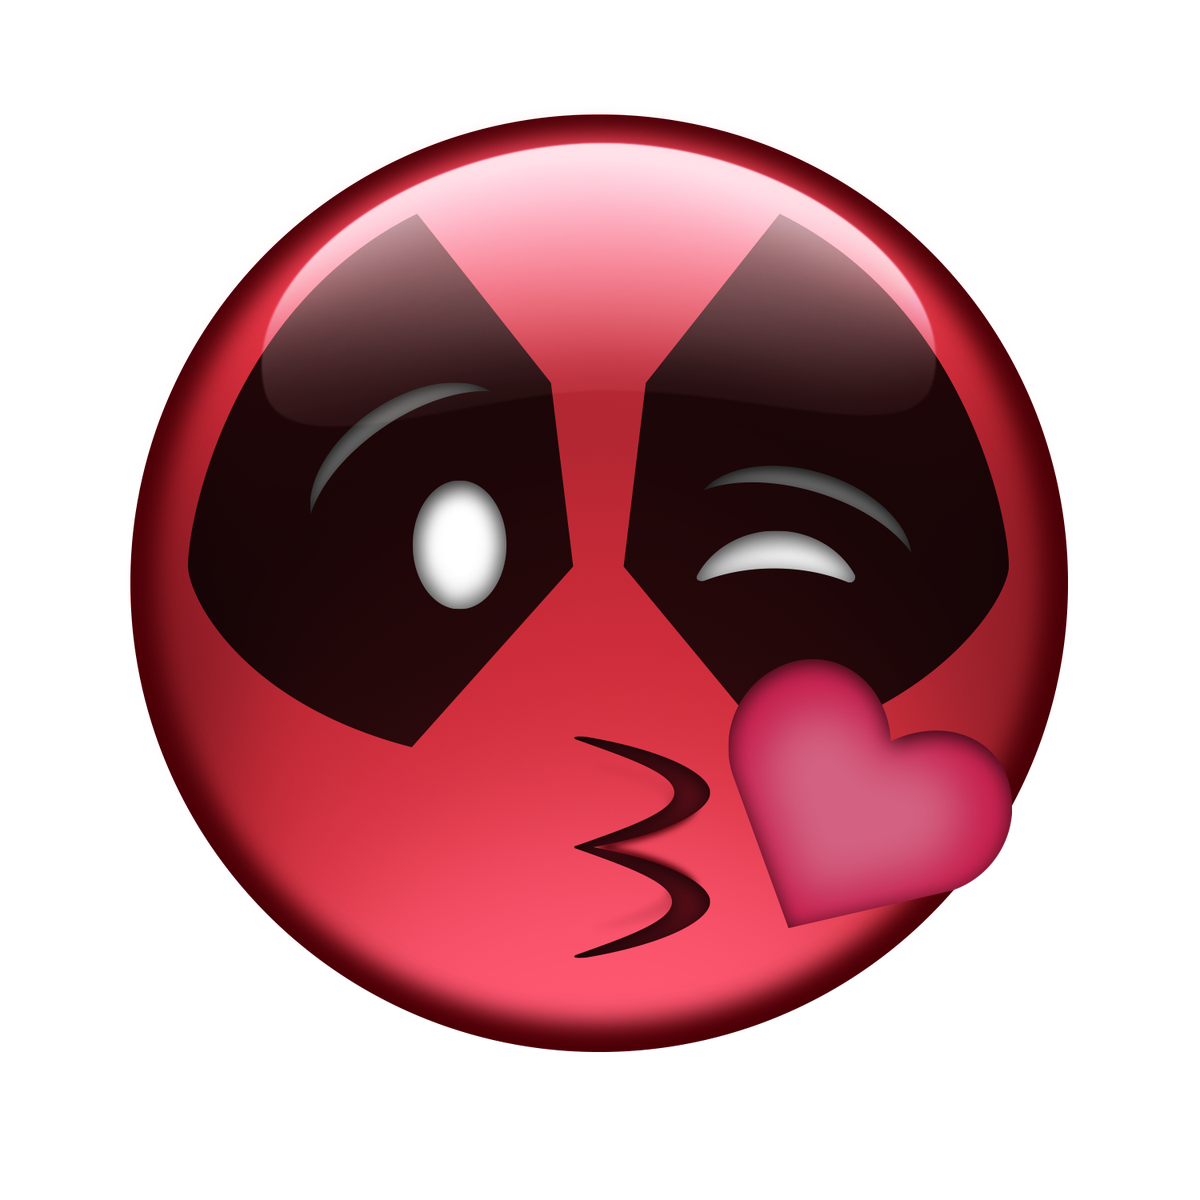 Pink Youtube Deadpool Skull Emoji PNG Image High Quality PNG Image